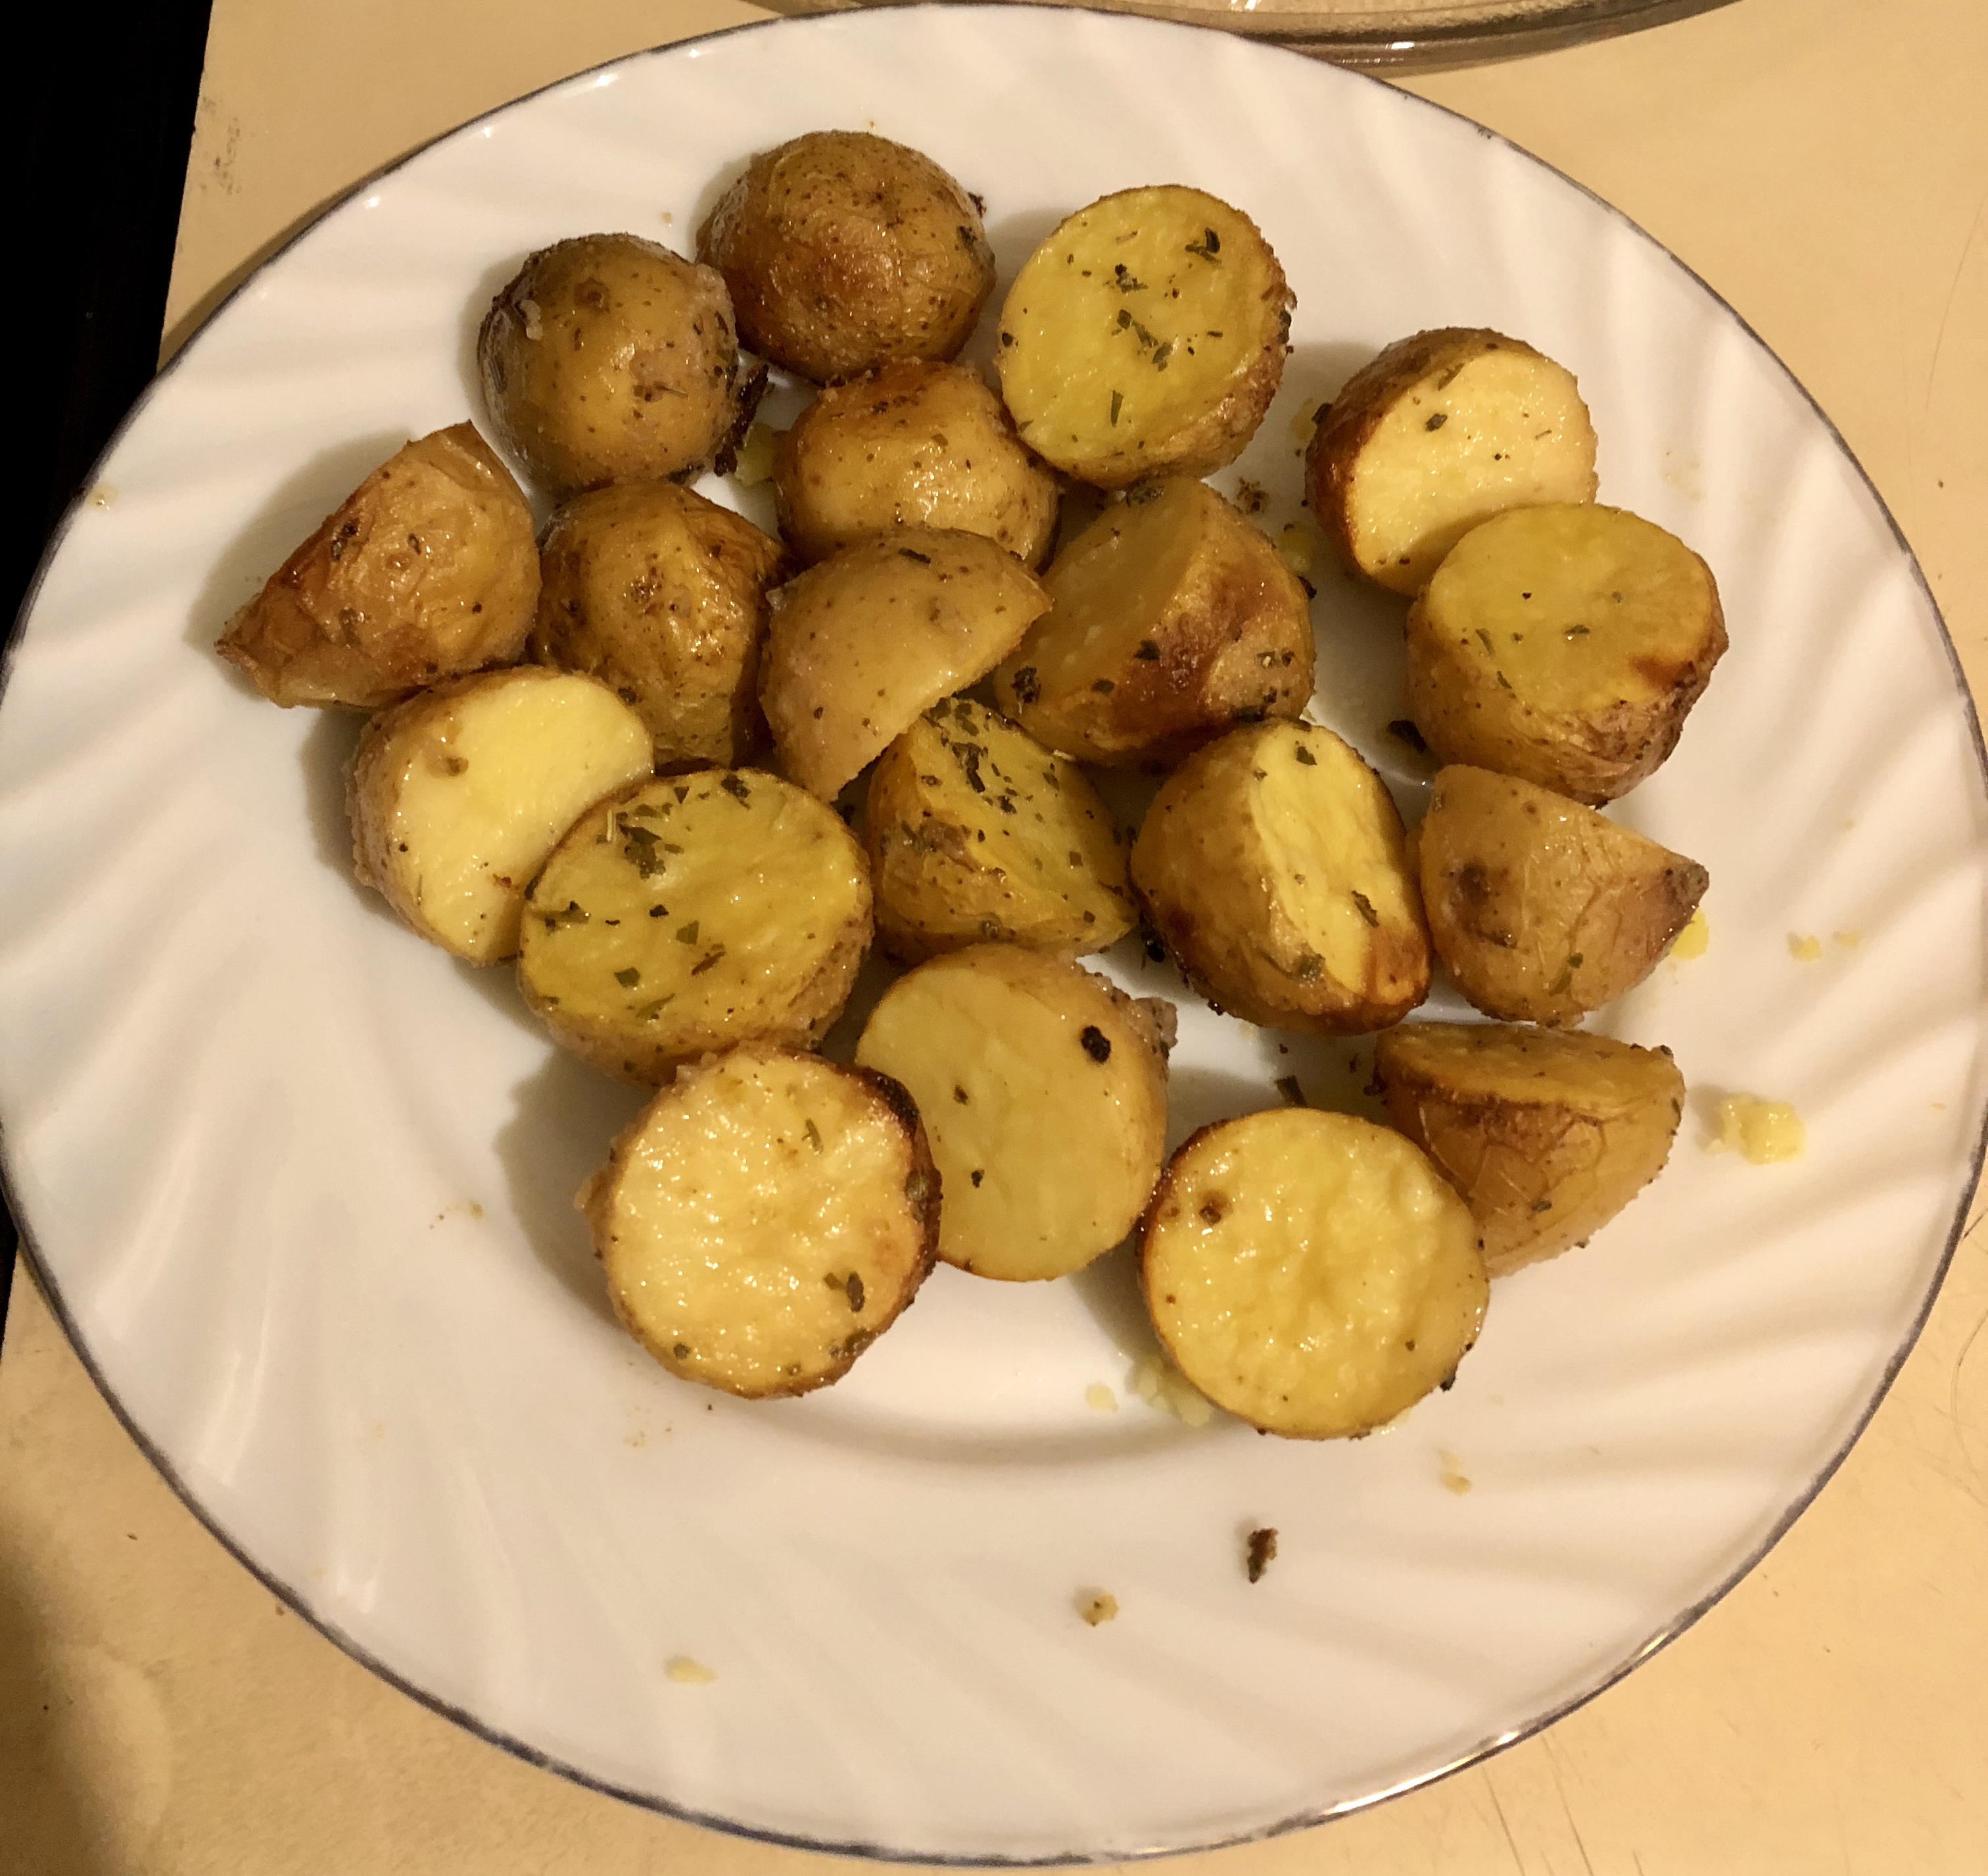 Garlic and Vinegar Roasted Potatoes